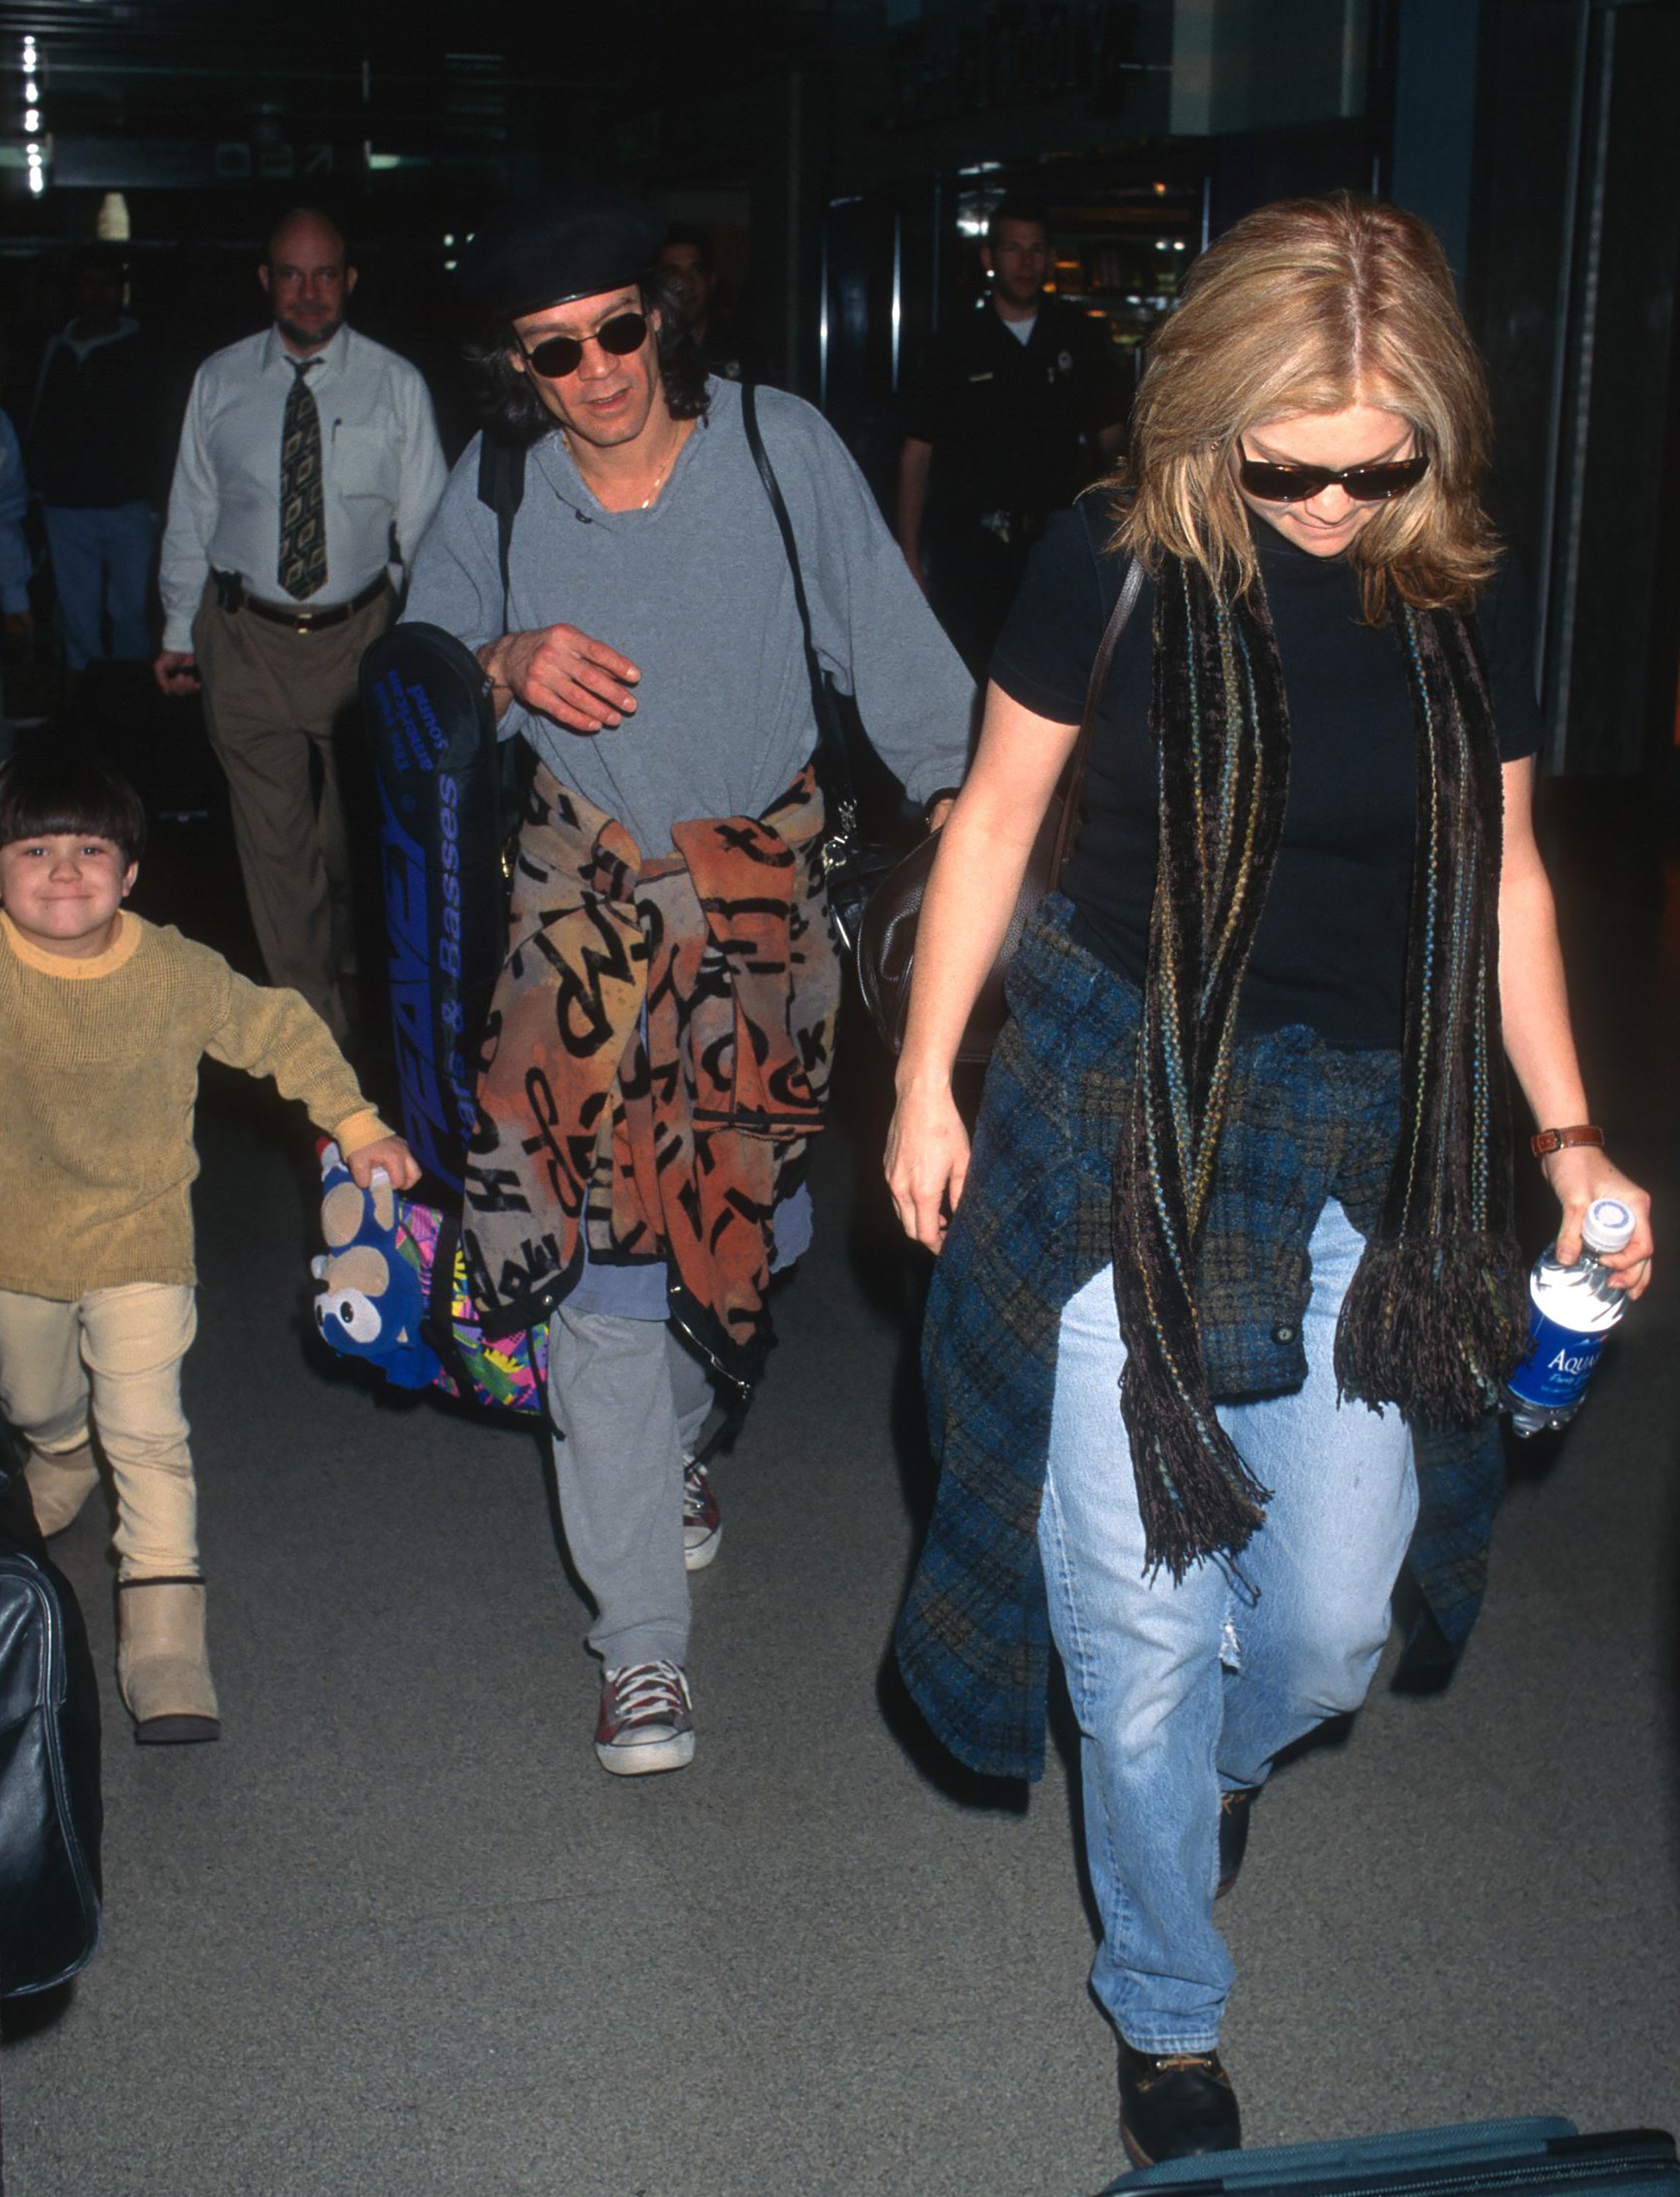 Eddie Van Halen, Wolfgang Van Halen and Valerie Bertinelli sighted at the Los Angeles International Airport in Los Angeles, California on January 29, 1997. | Source: Getty Images